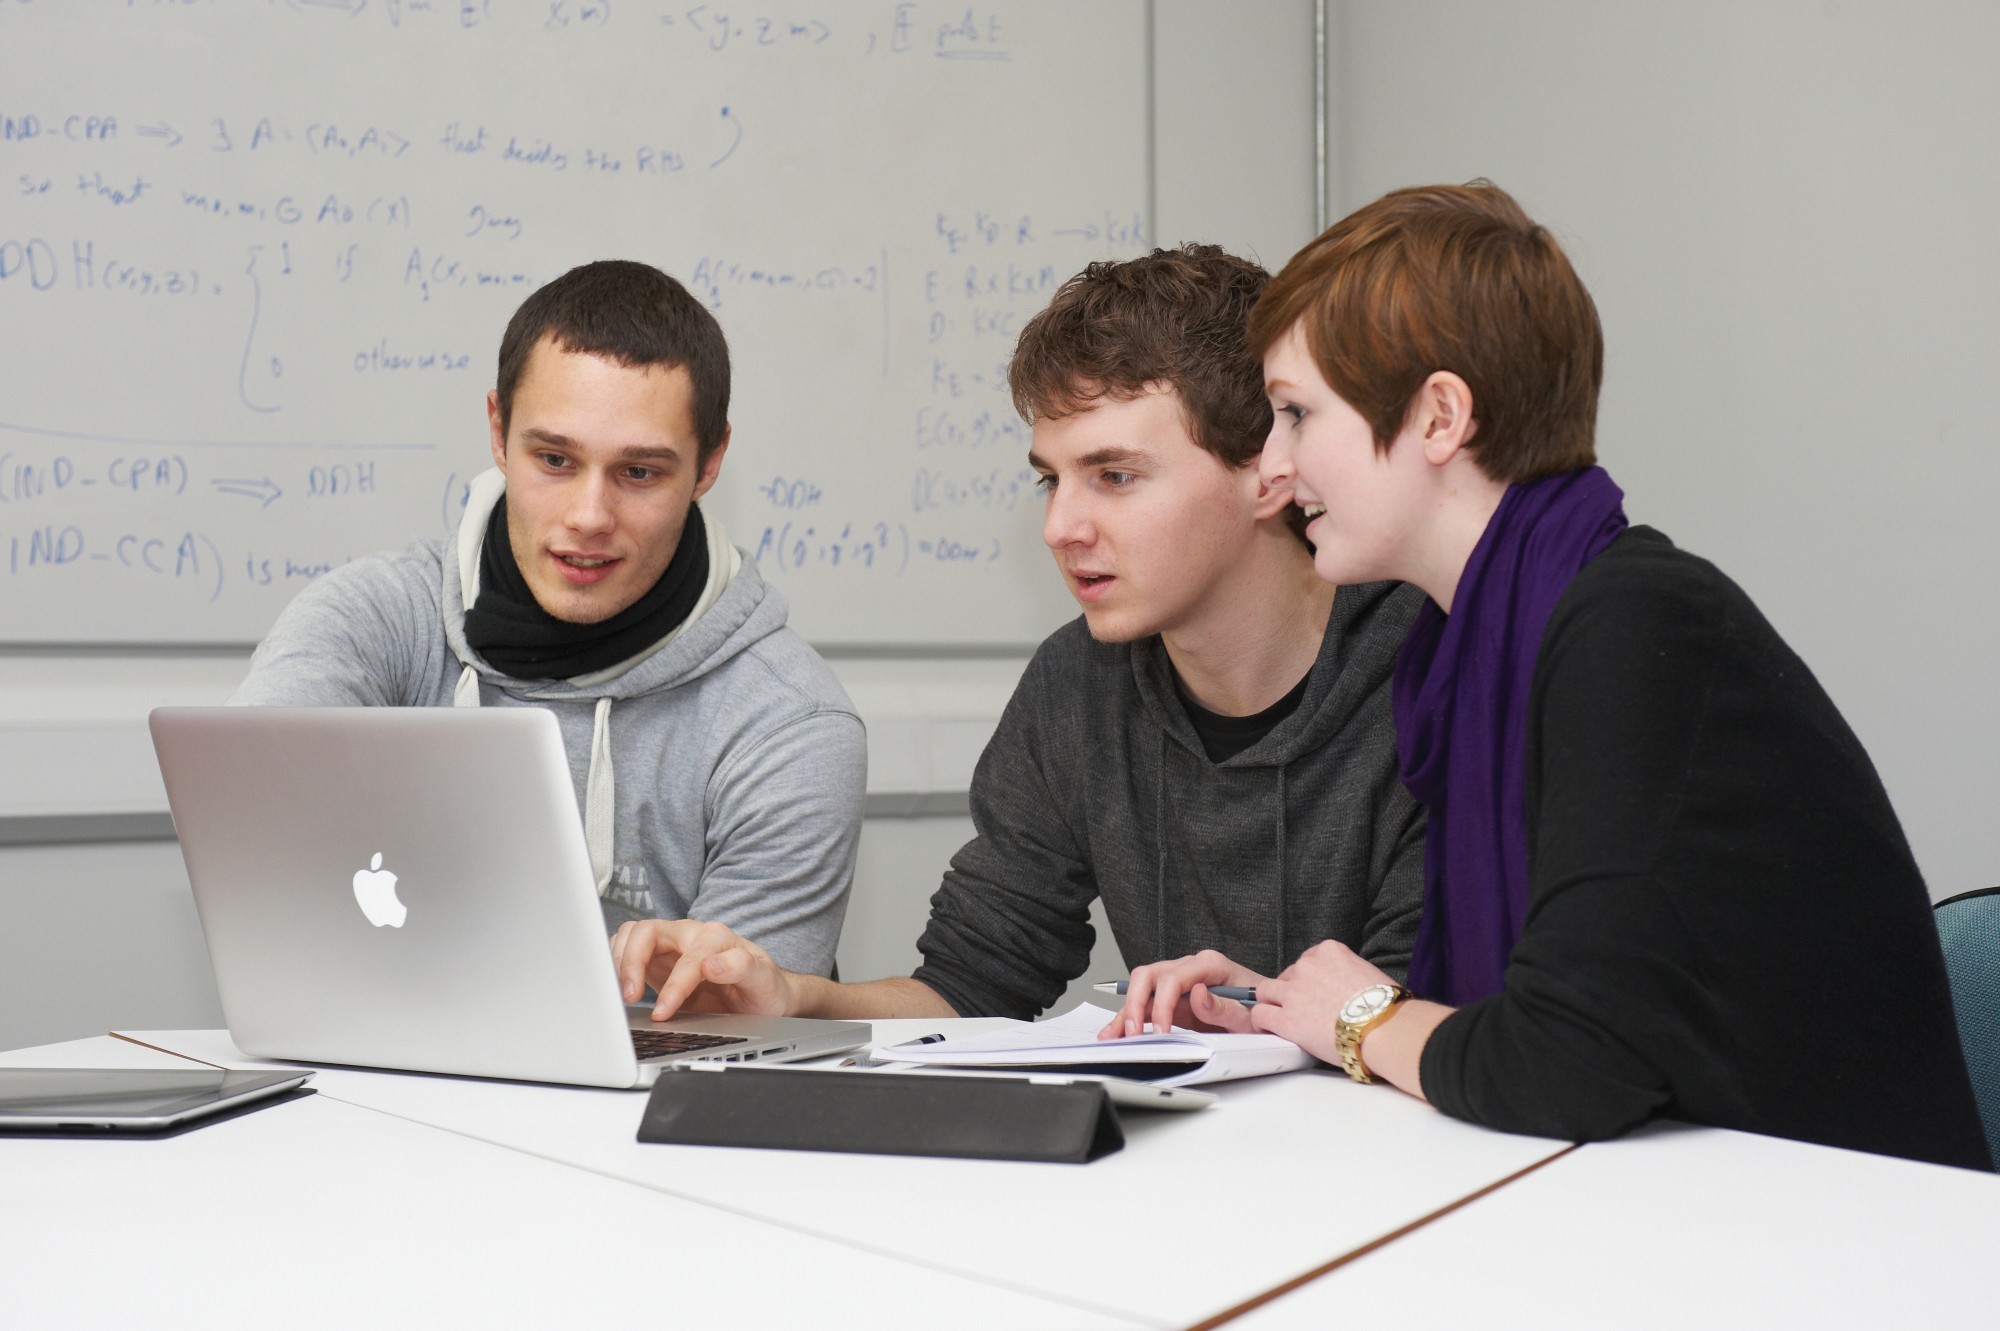 Students looking at laptop in seminar